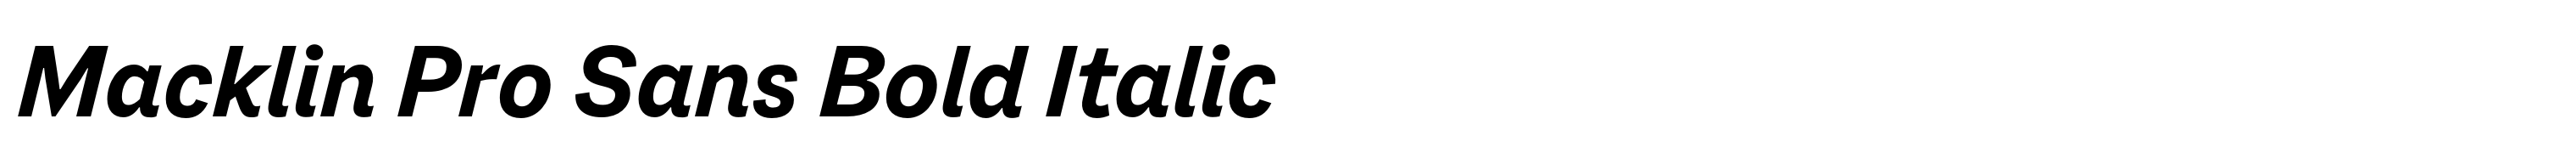 Macklin Pro Sans Bold Italic